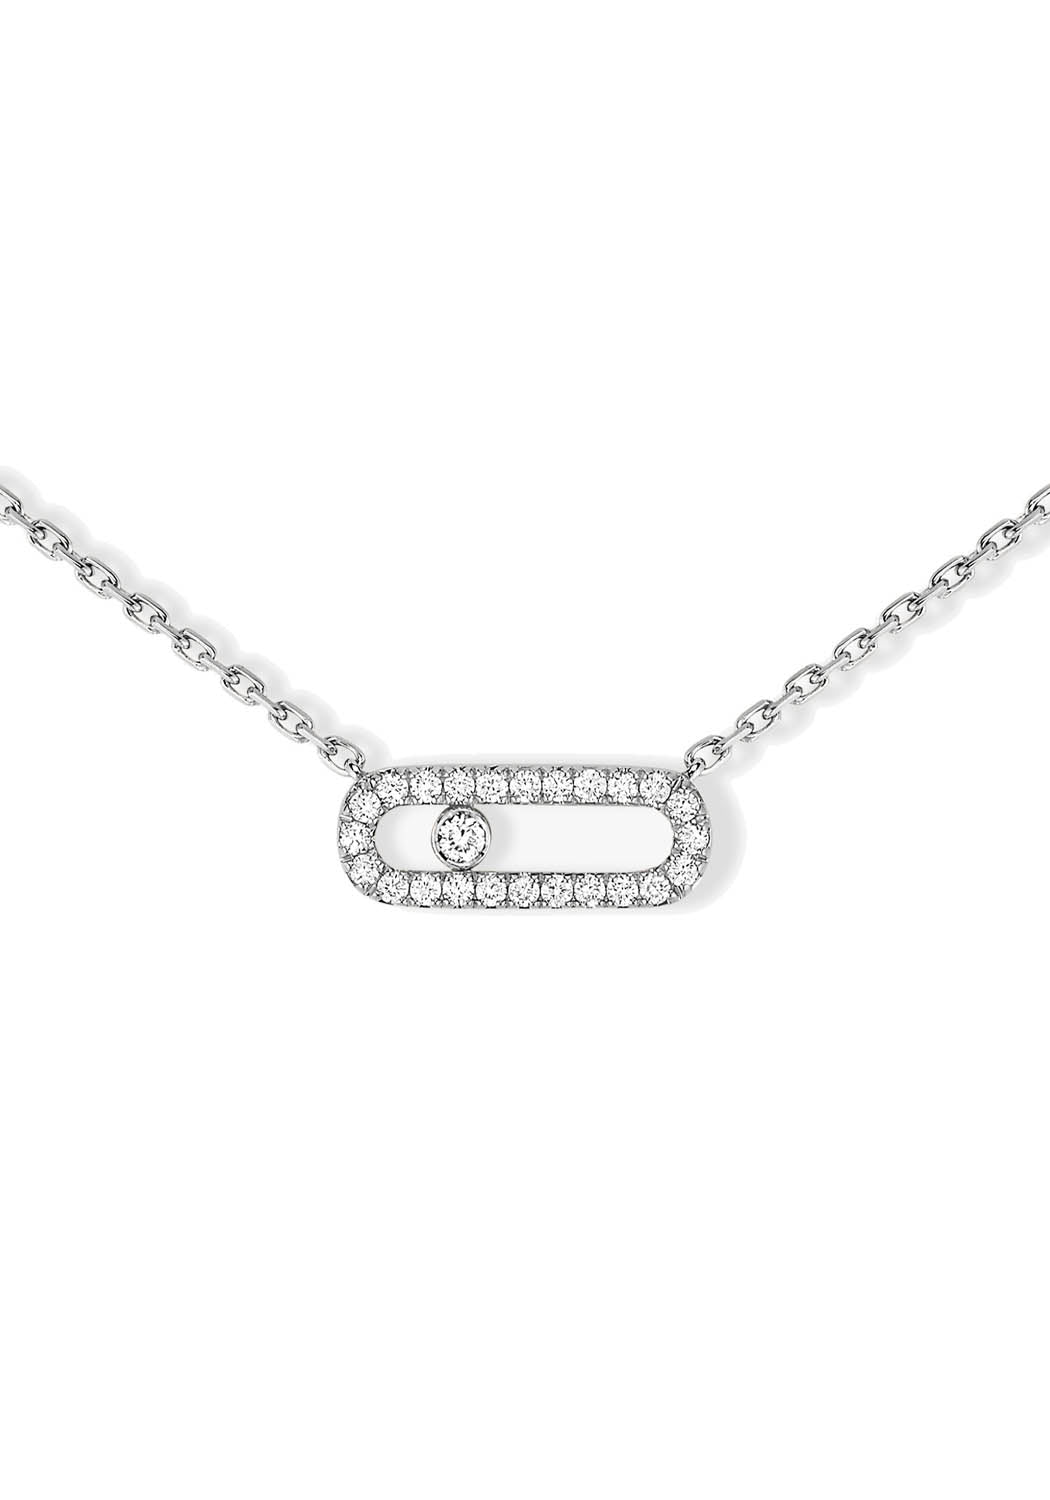 Messika Move Uno Pavé 18KWG Diamond Necklace | Ref. 04708 | OsterJewelers.com